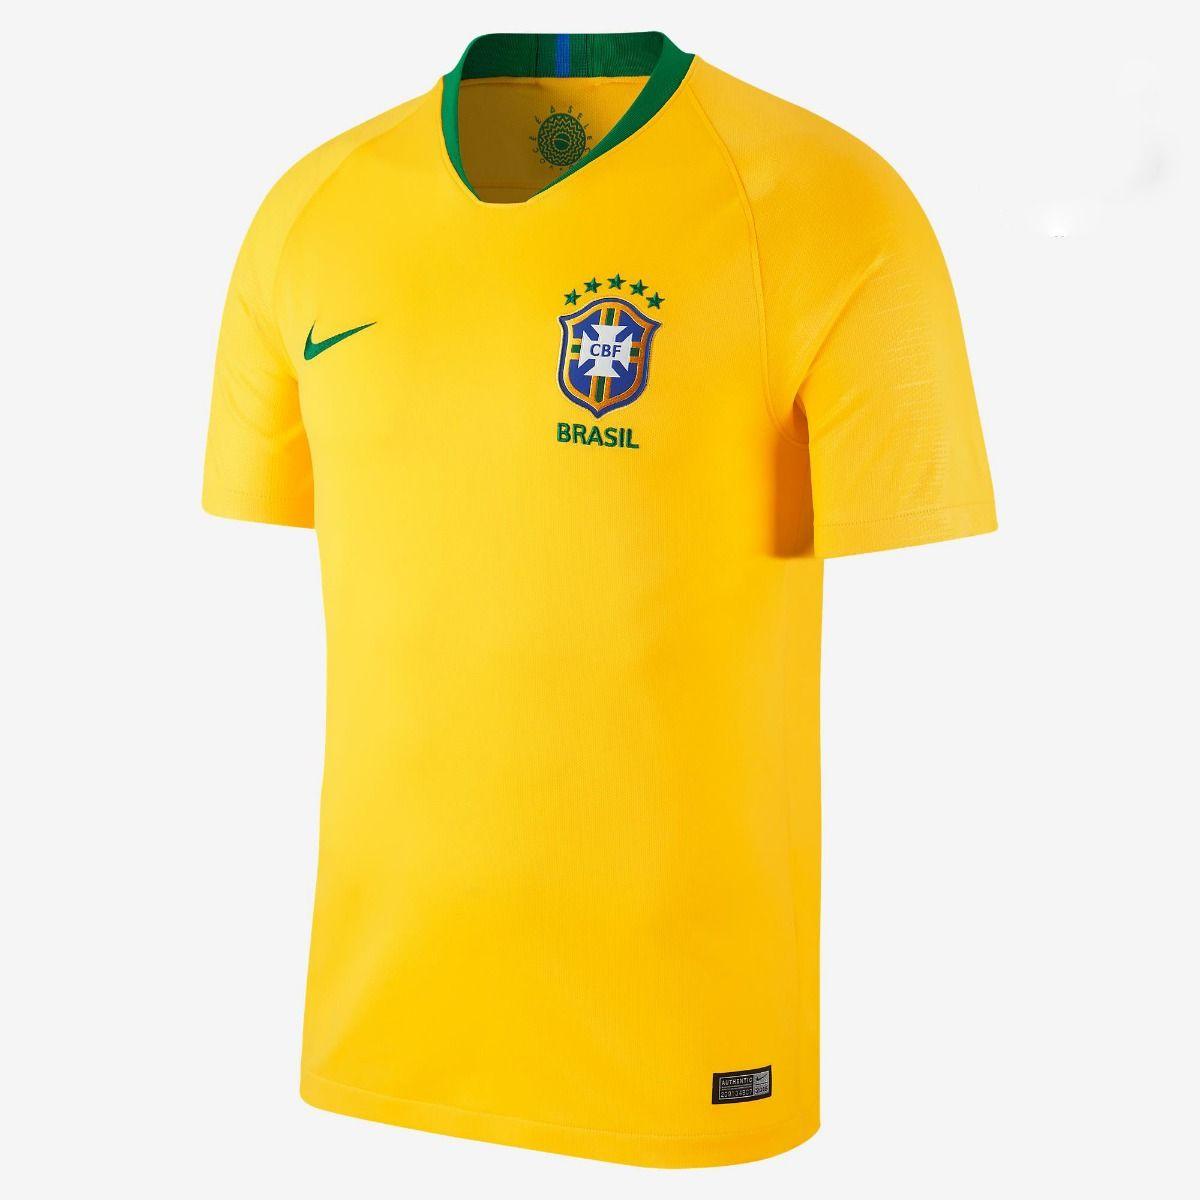 Brazil 18/19 World Cup Home Yellow Jersey - Obeezi.com